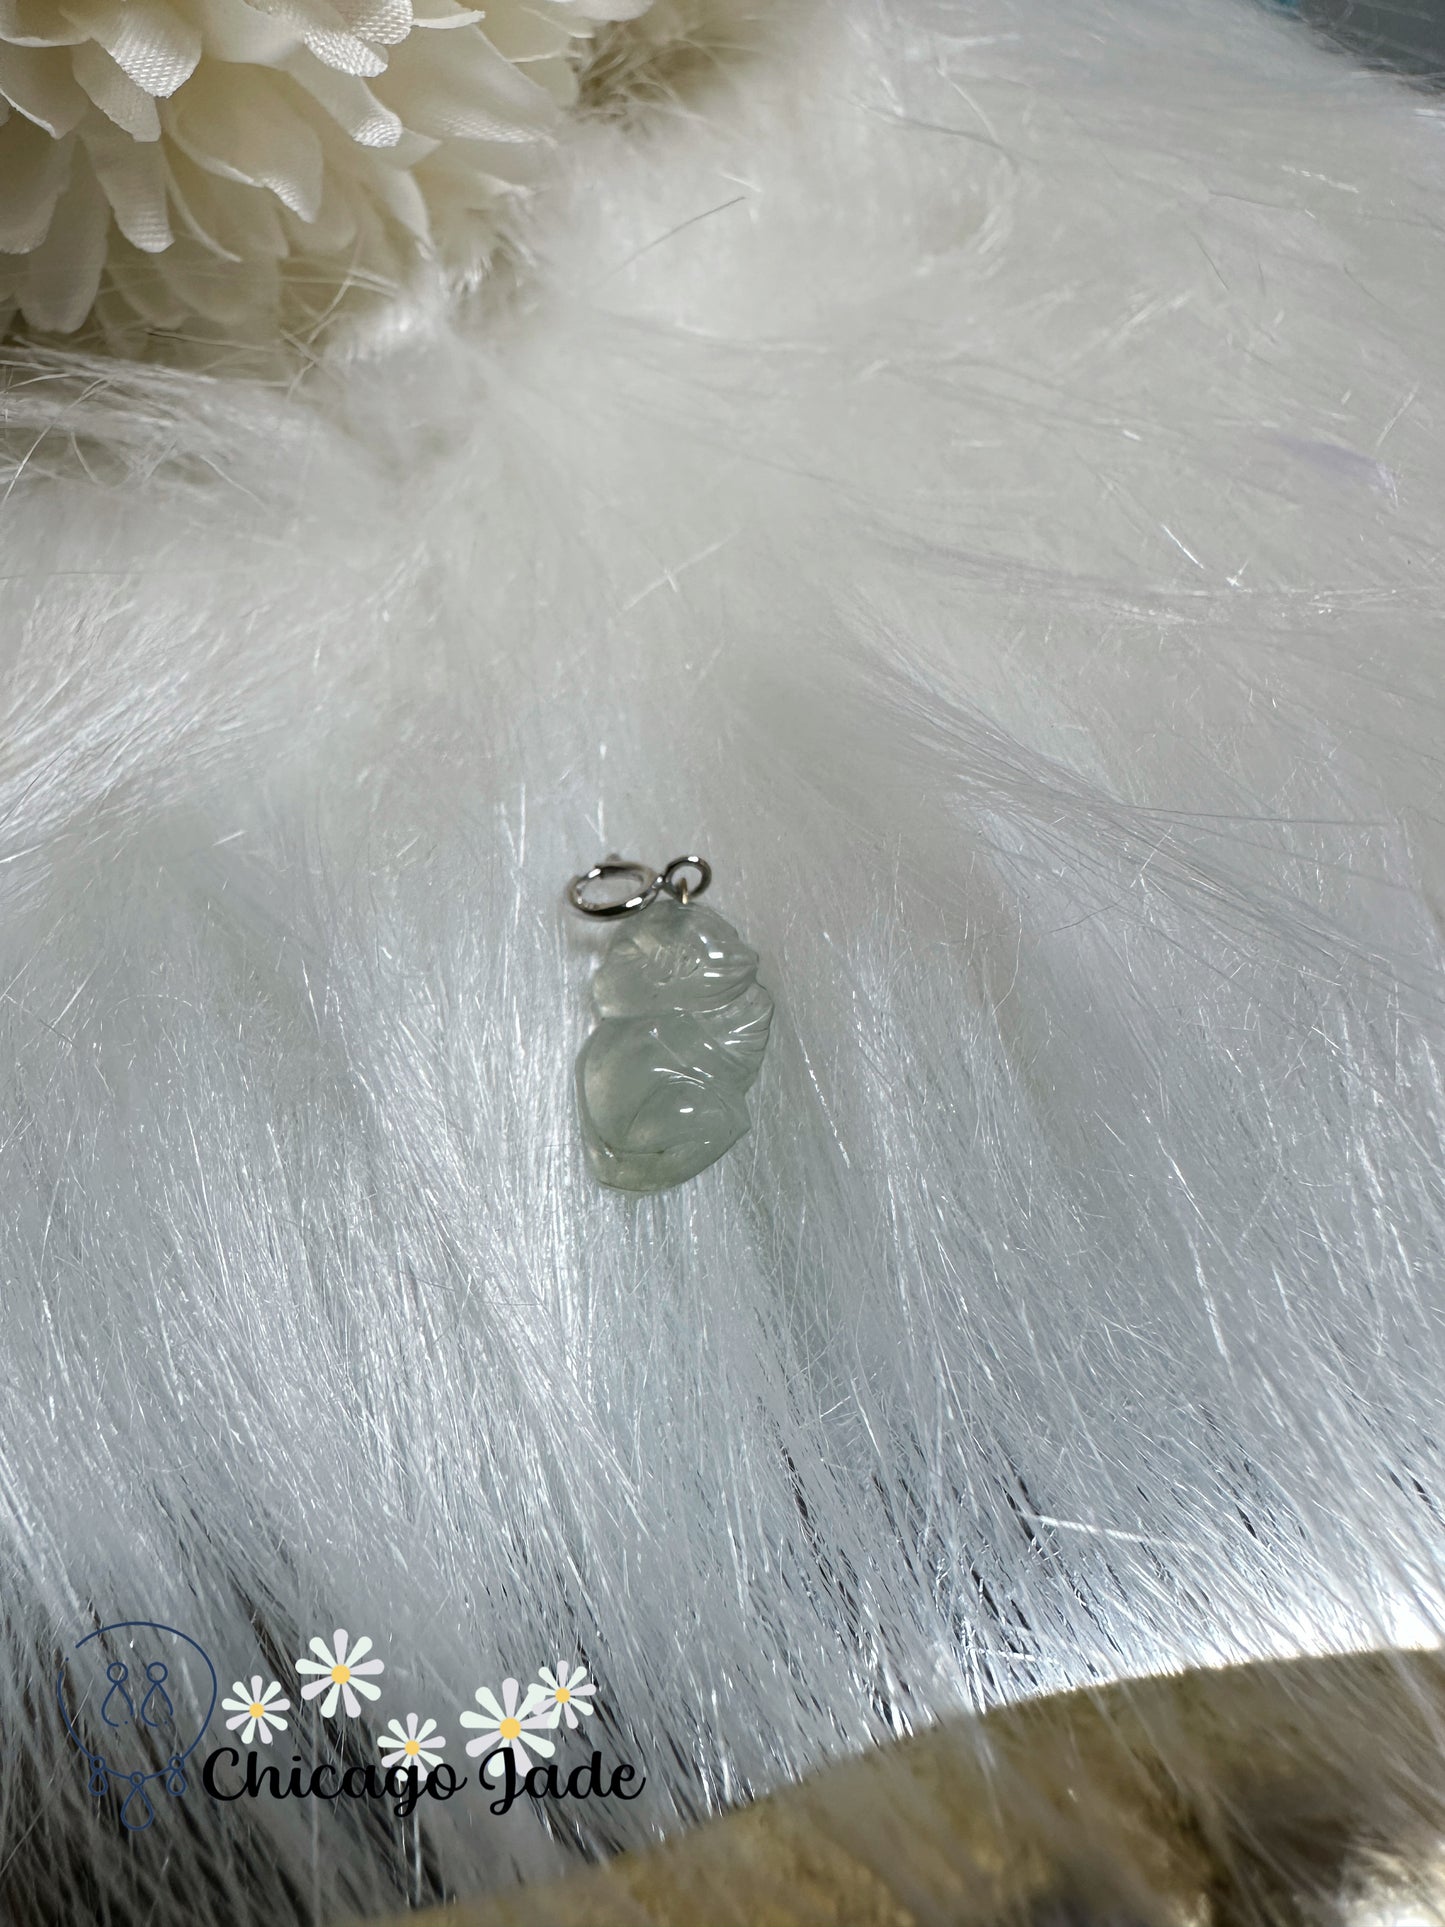 Highly translucent tiny angel finely polished high quality jadeite jade pendant - 18k gold multi-use see through